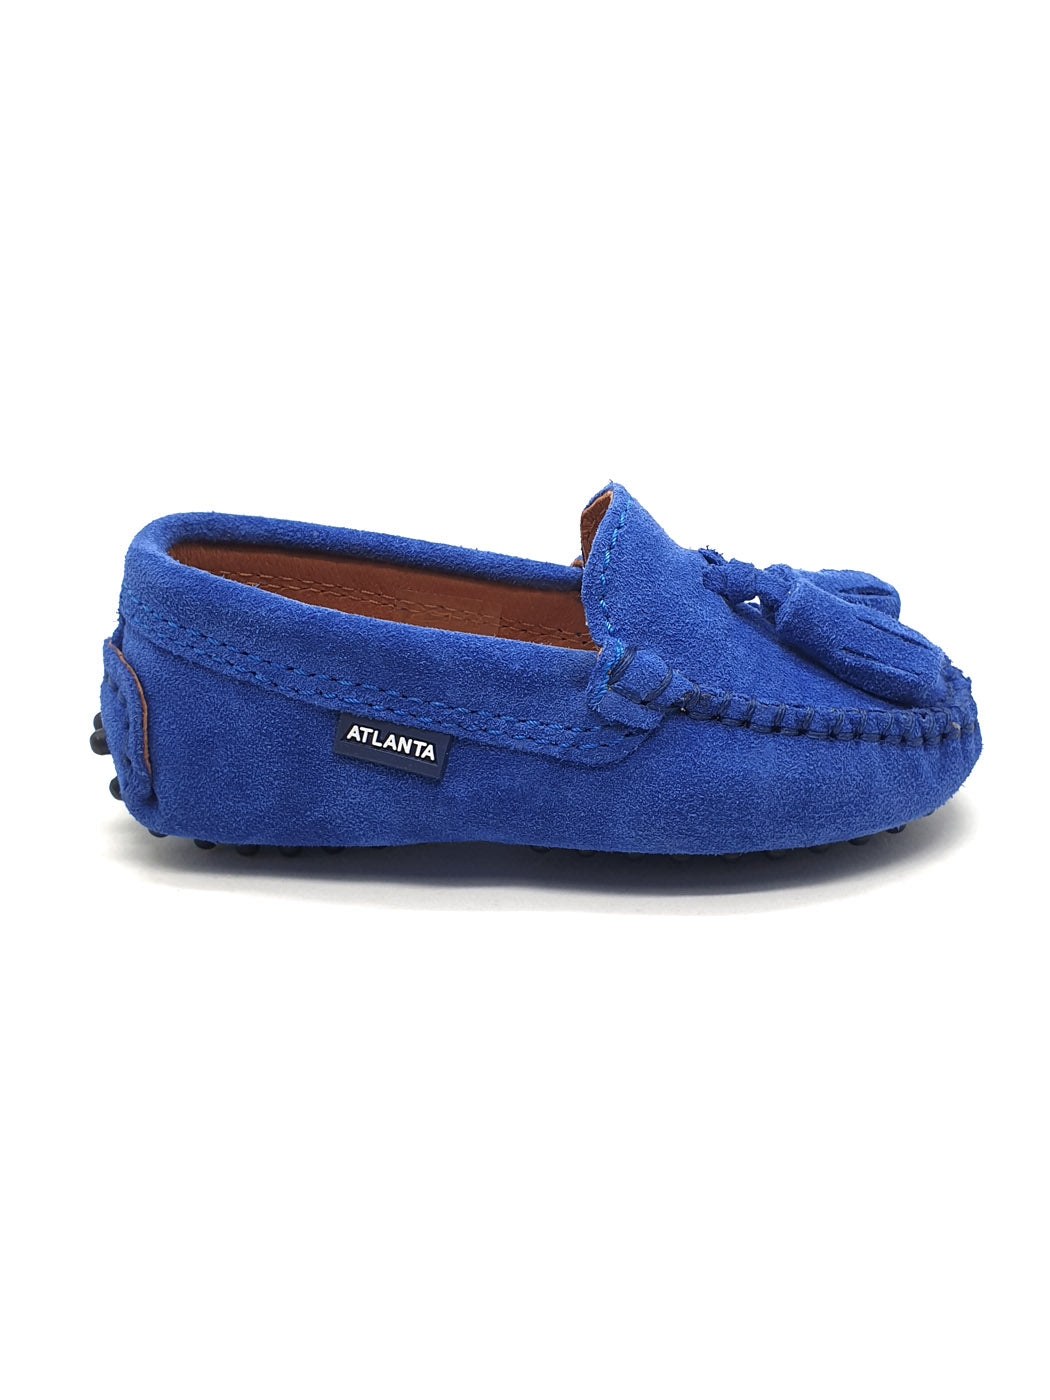 Atlanta Mocassin-Baby Shoes Moccasins Blue-016P009